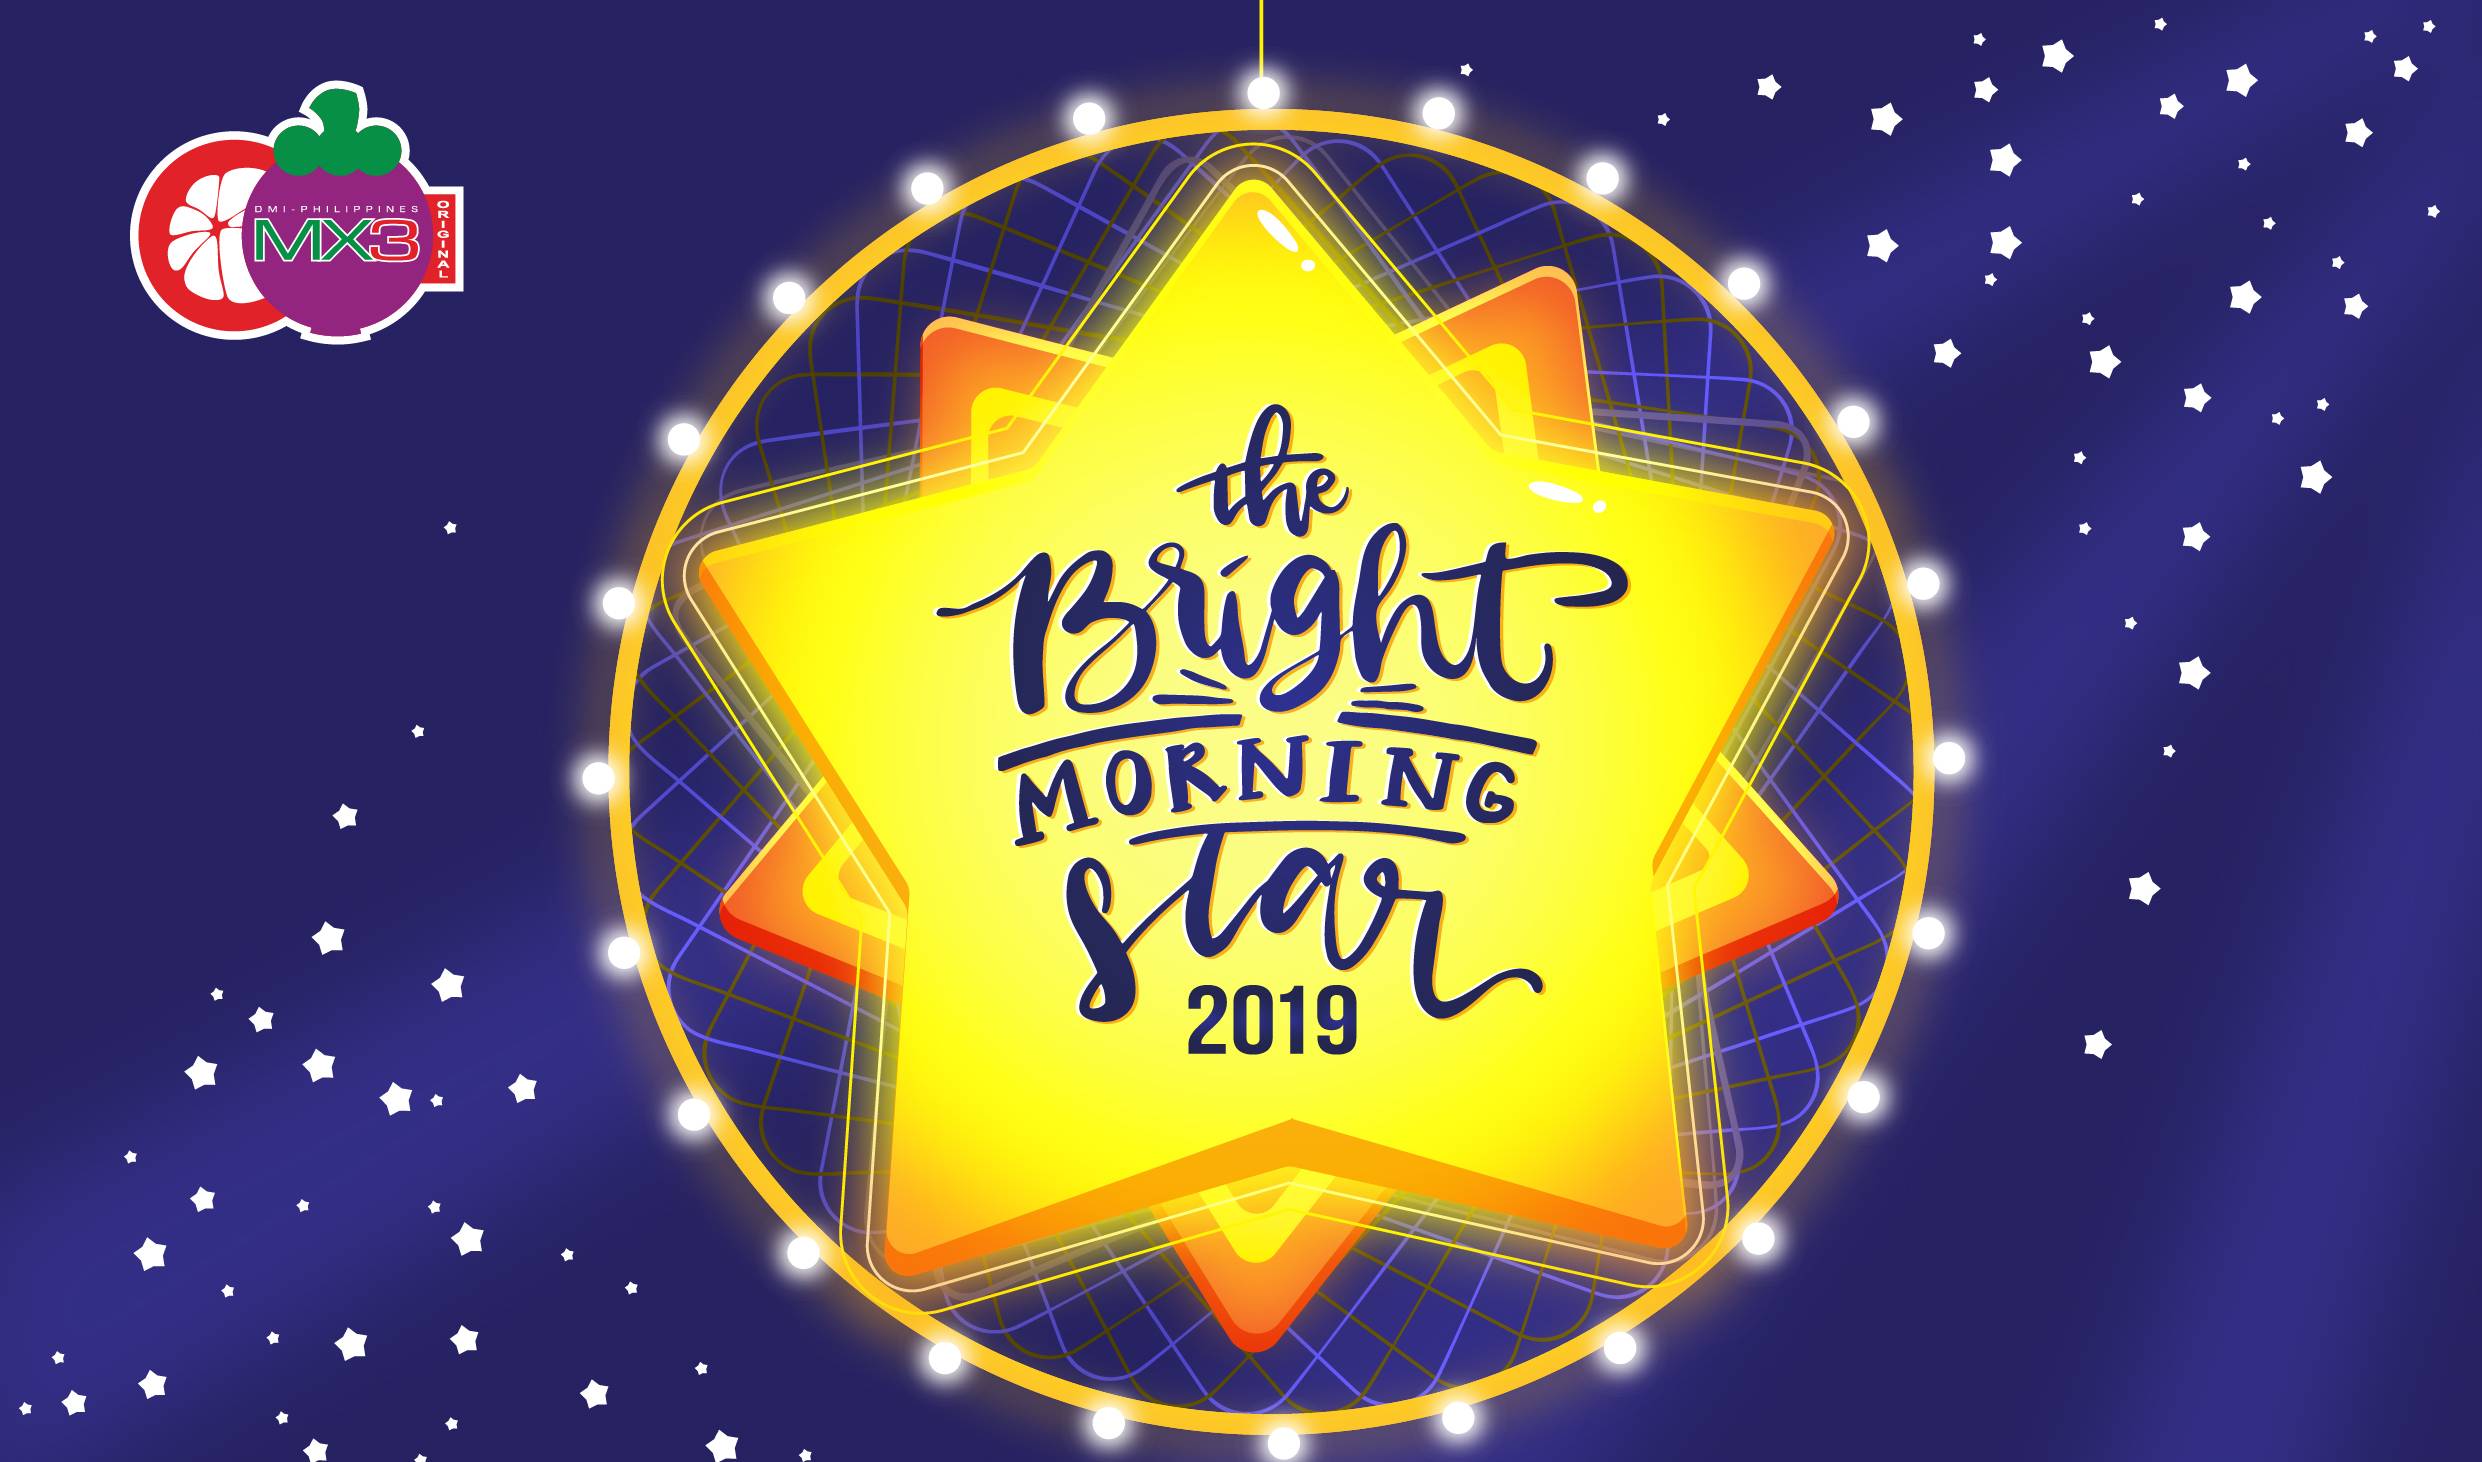 mx3-bright-morning-star-2019